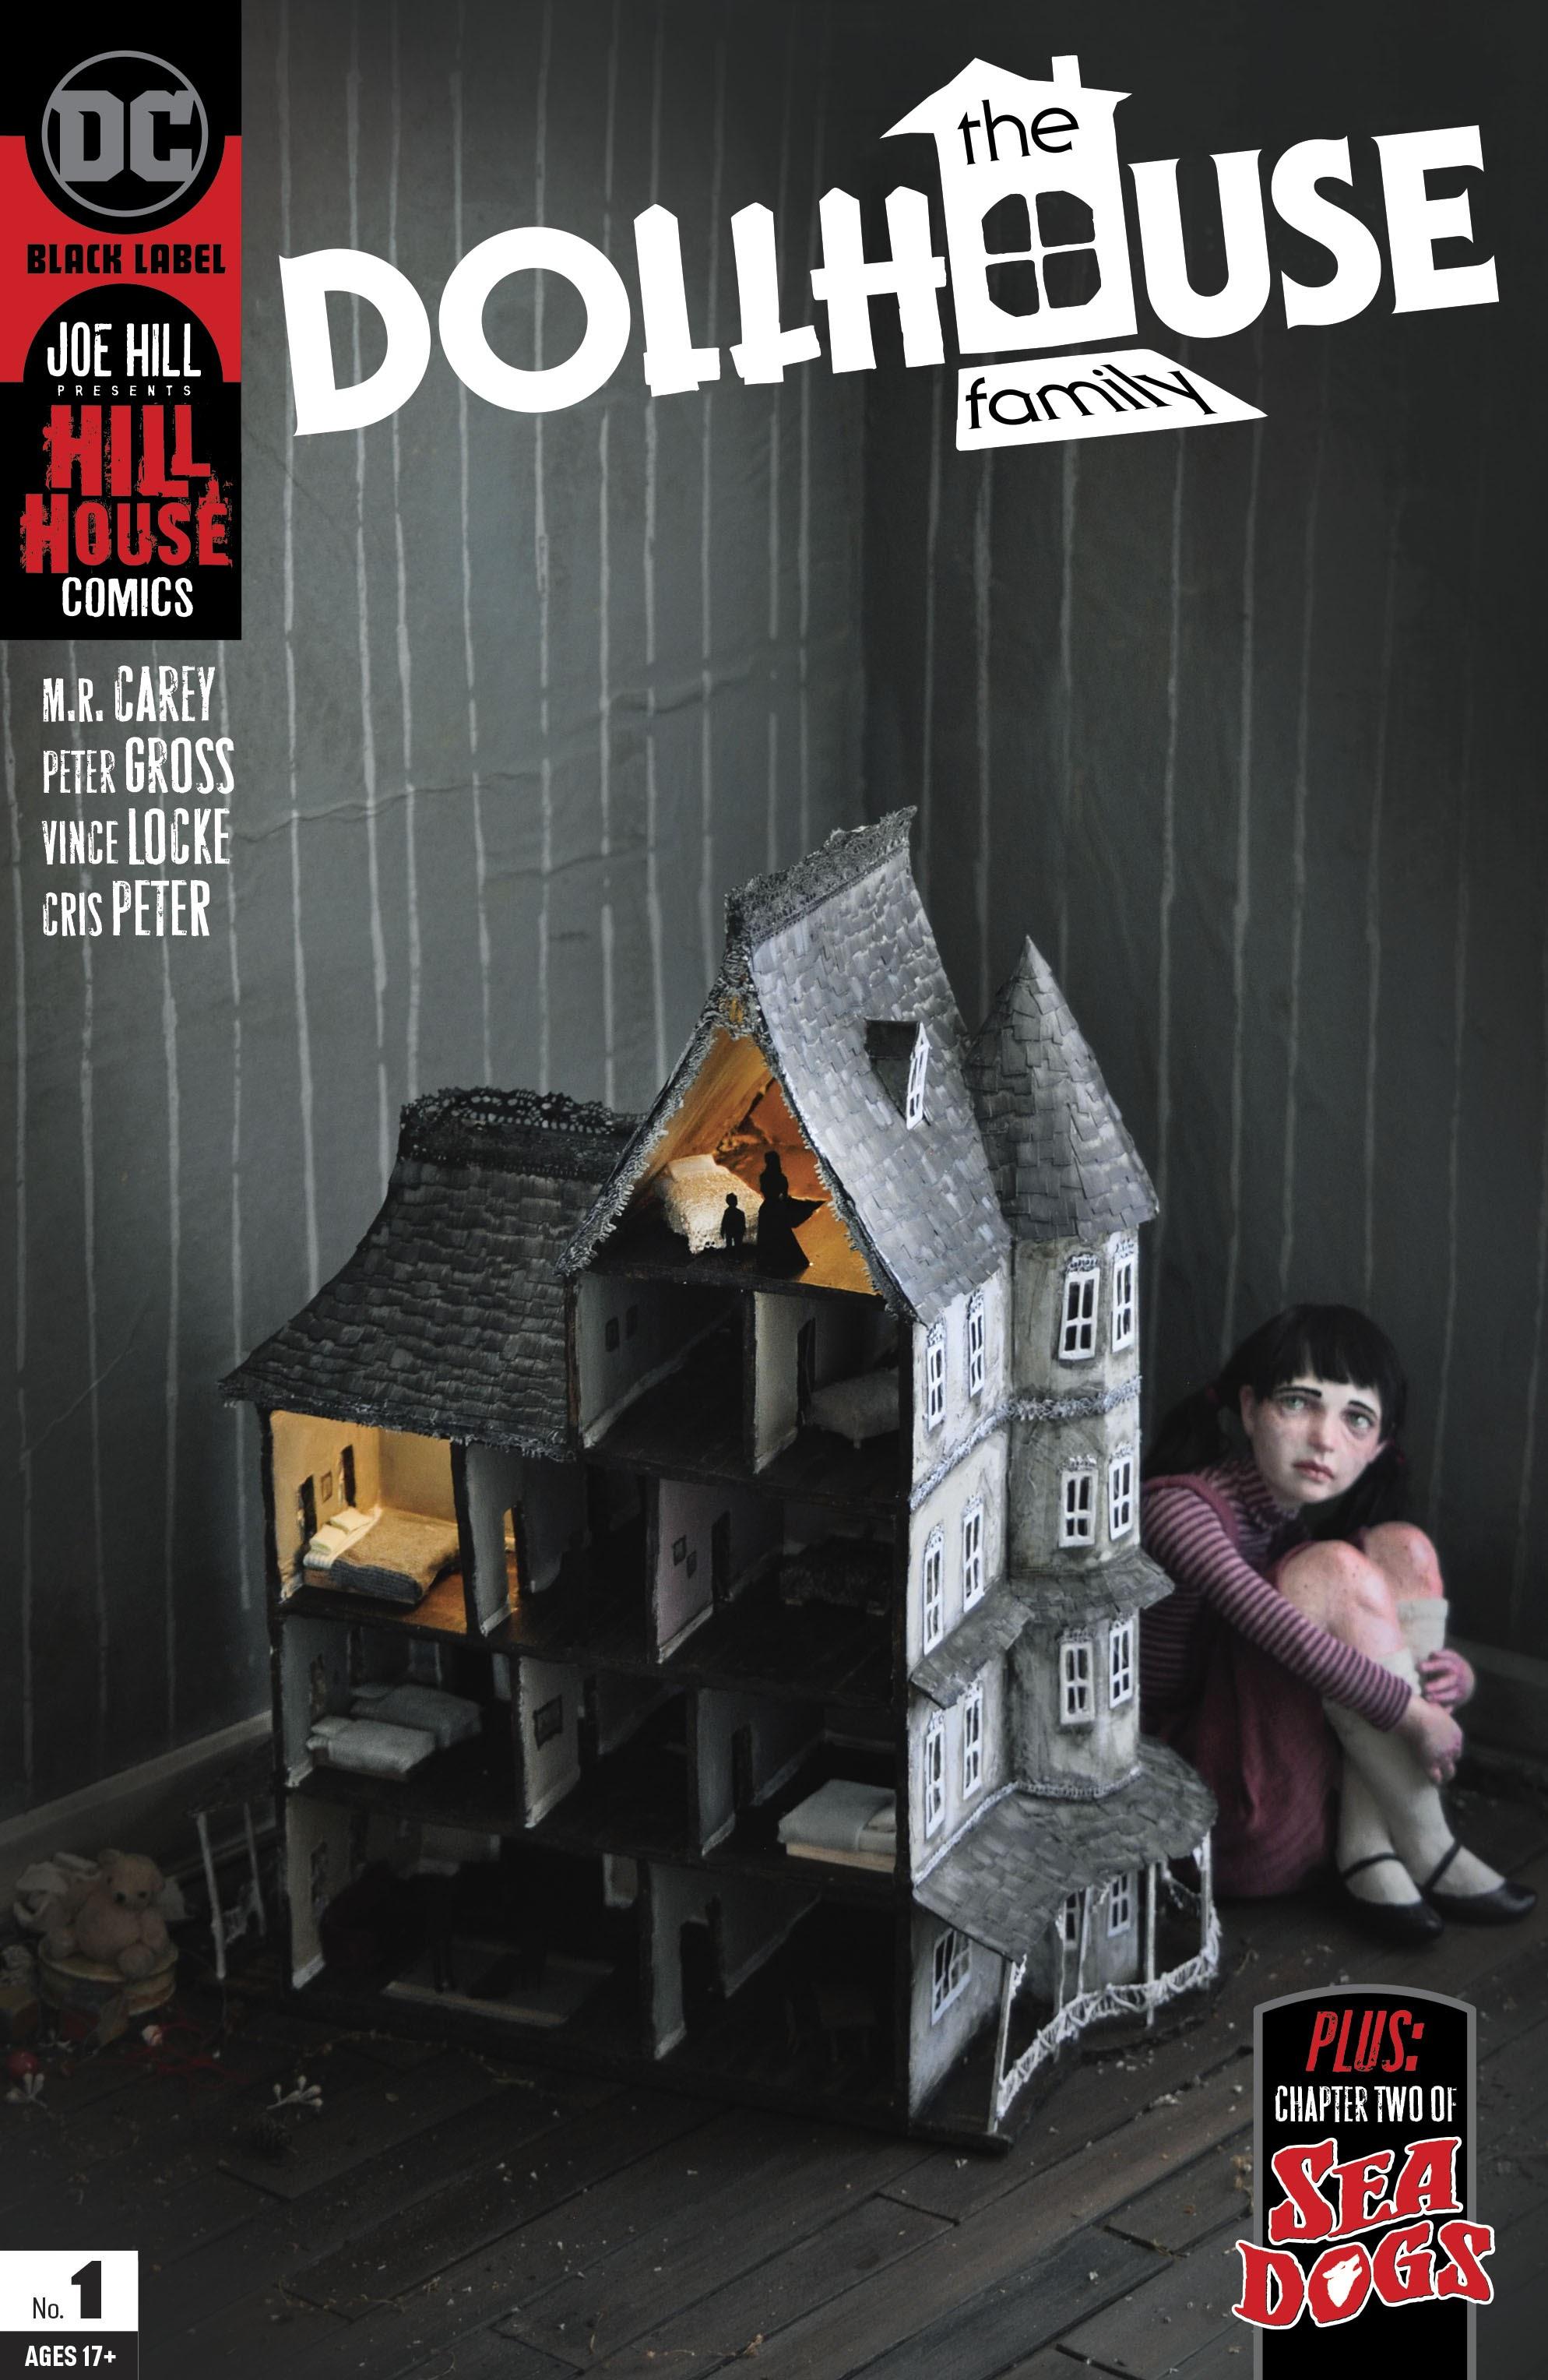 The Dollhouse Family Vol. 1 #1